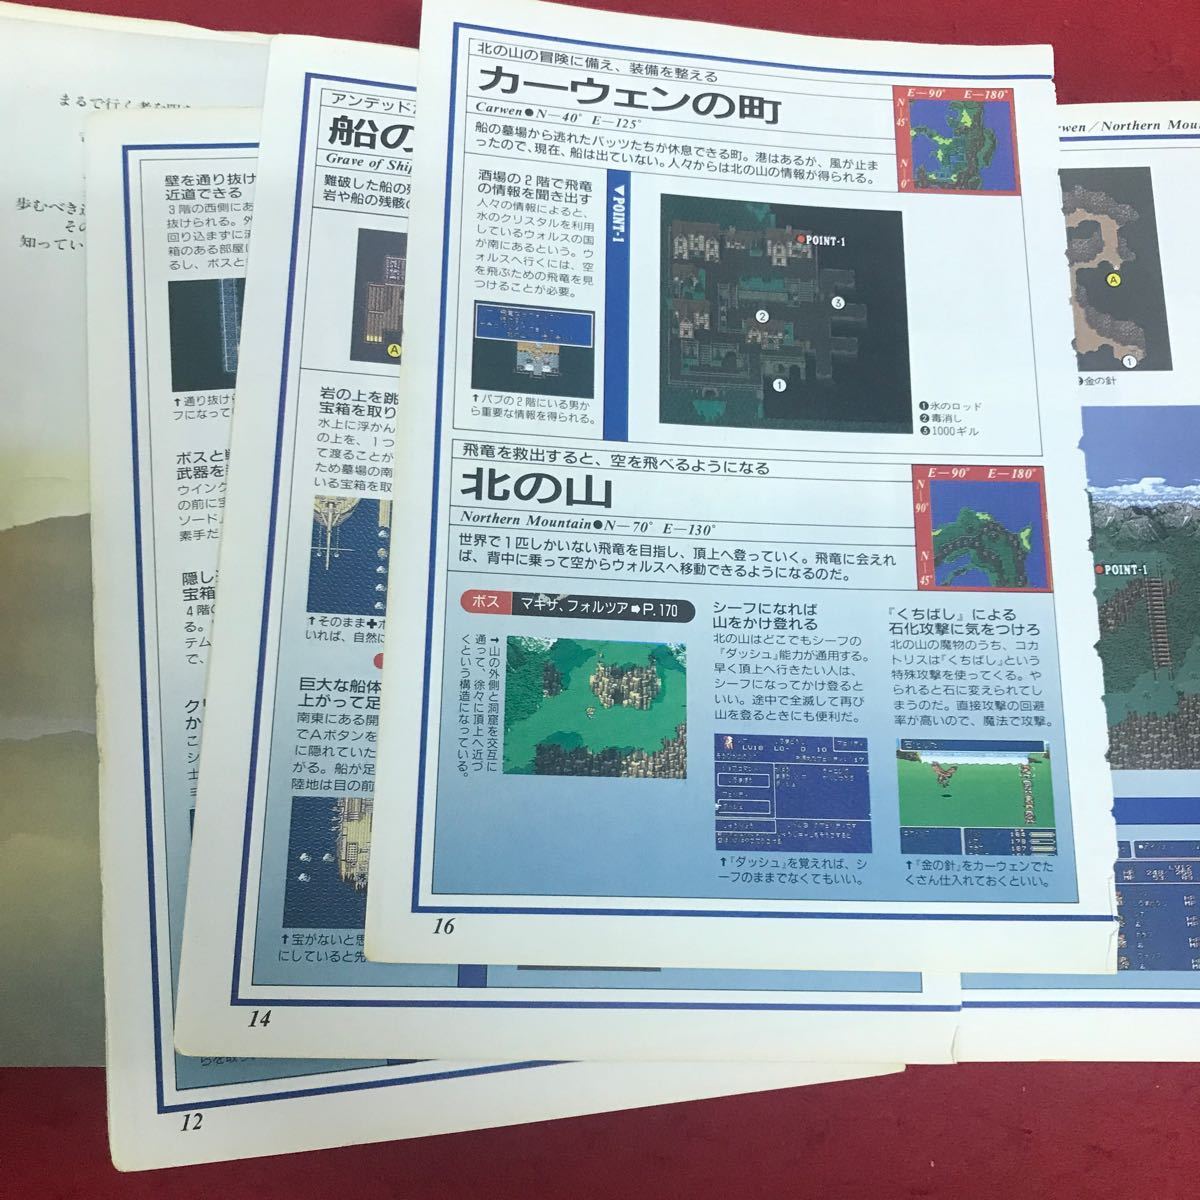 a-564 ファイナルファンタジー Ⅴ 完全攻略編 NTT出版株式会社 1994年6月8日10刷発行 FF5 スーパーファミコン ゲーム 攻略本 ※1_P10まで落丁 その他乱丁あり